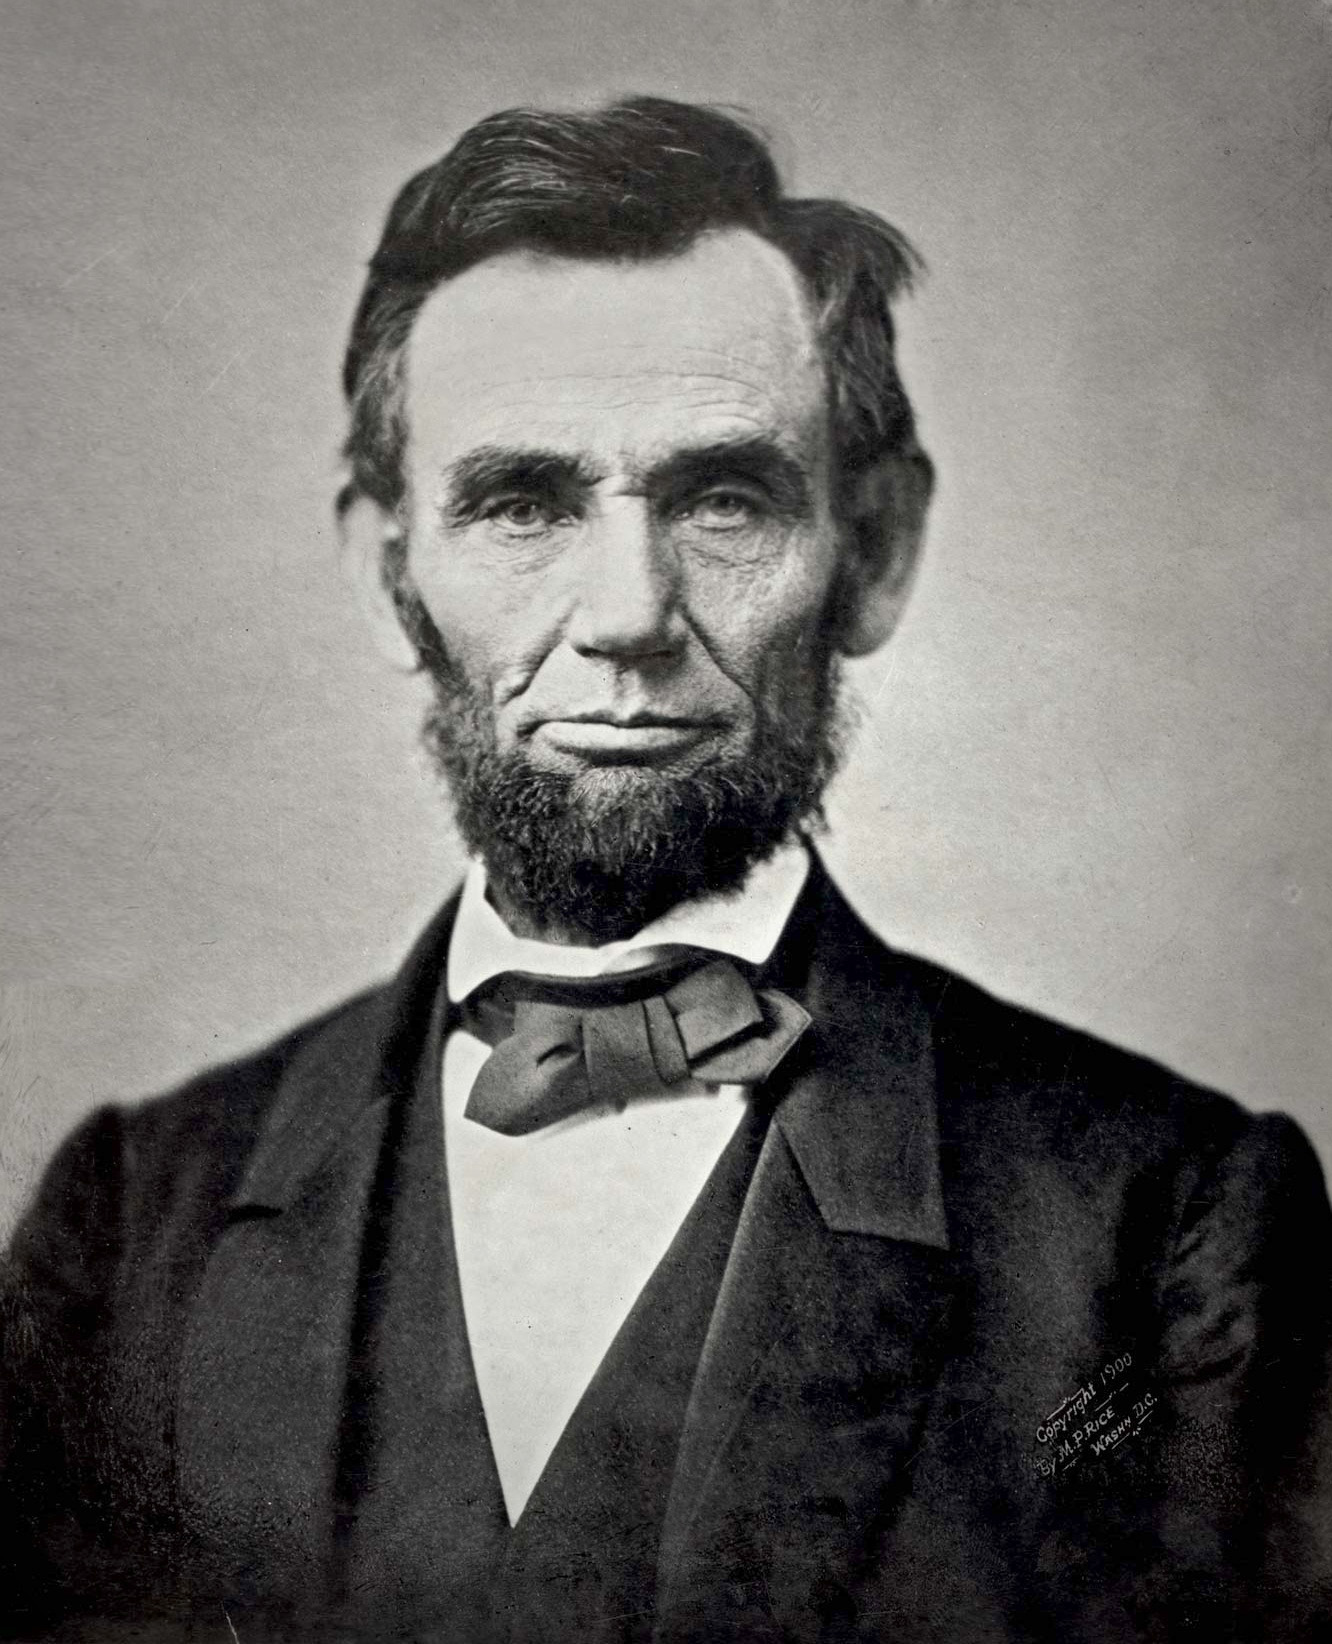 https://upload.wikimedia.org/wikipedia/commons/1/1b/Abraham_Lincoln_November_1863.jpg